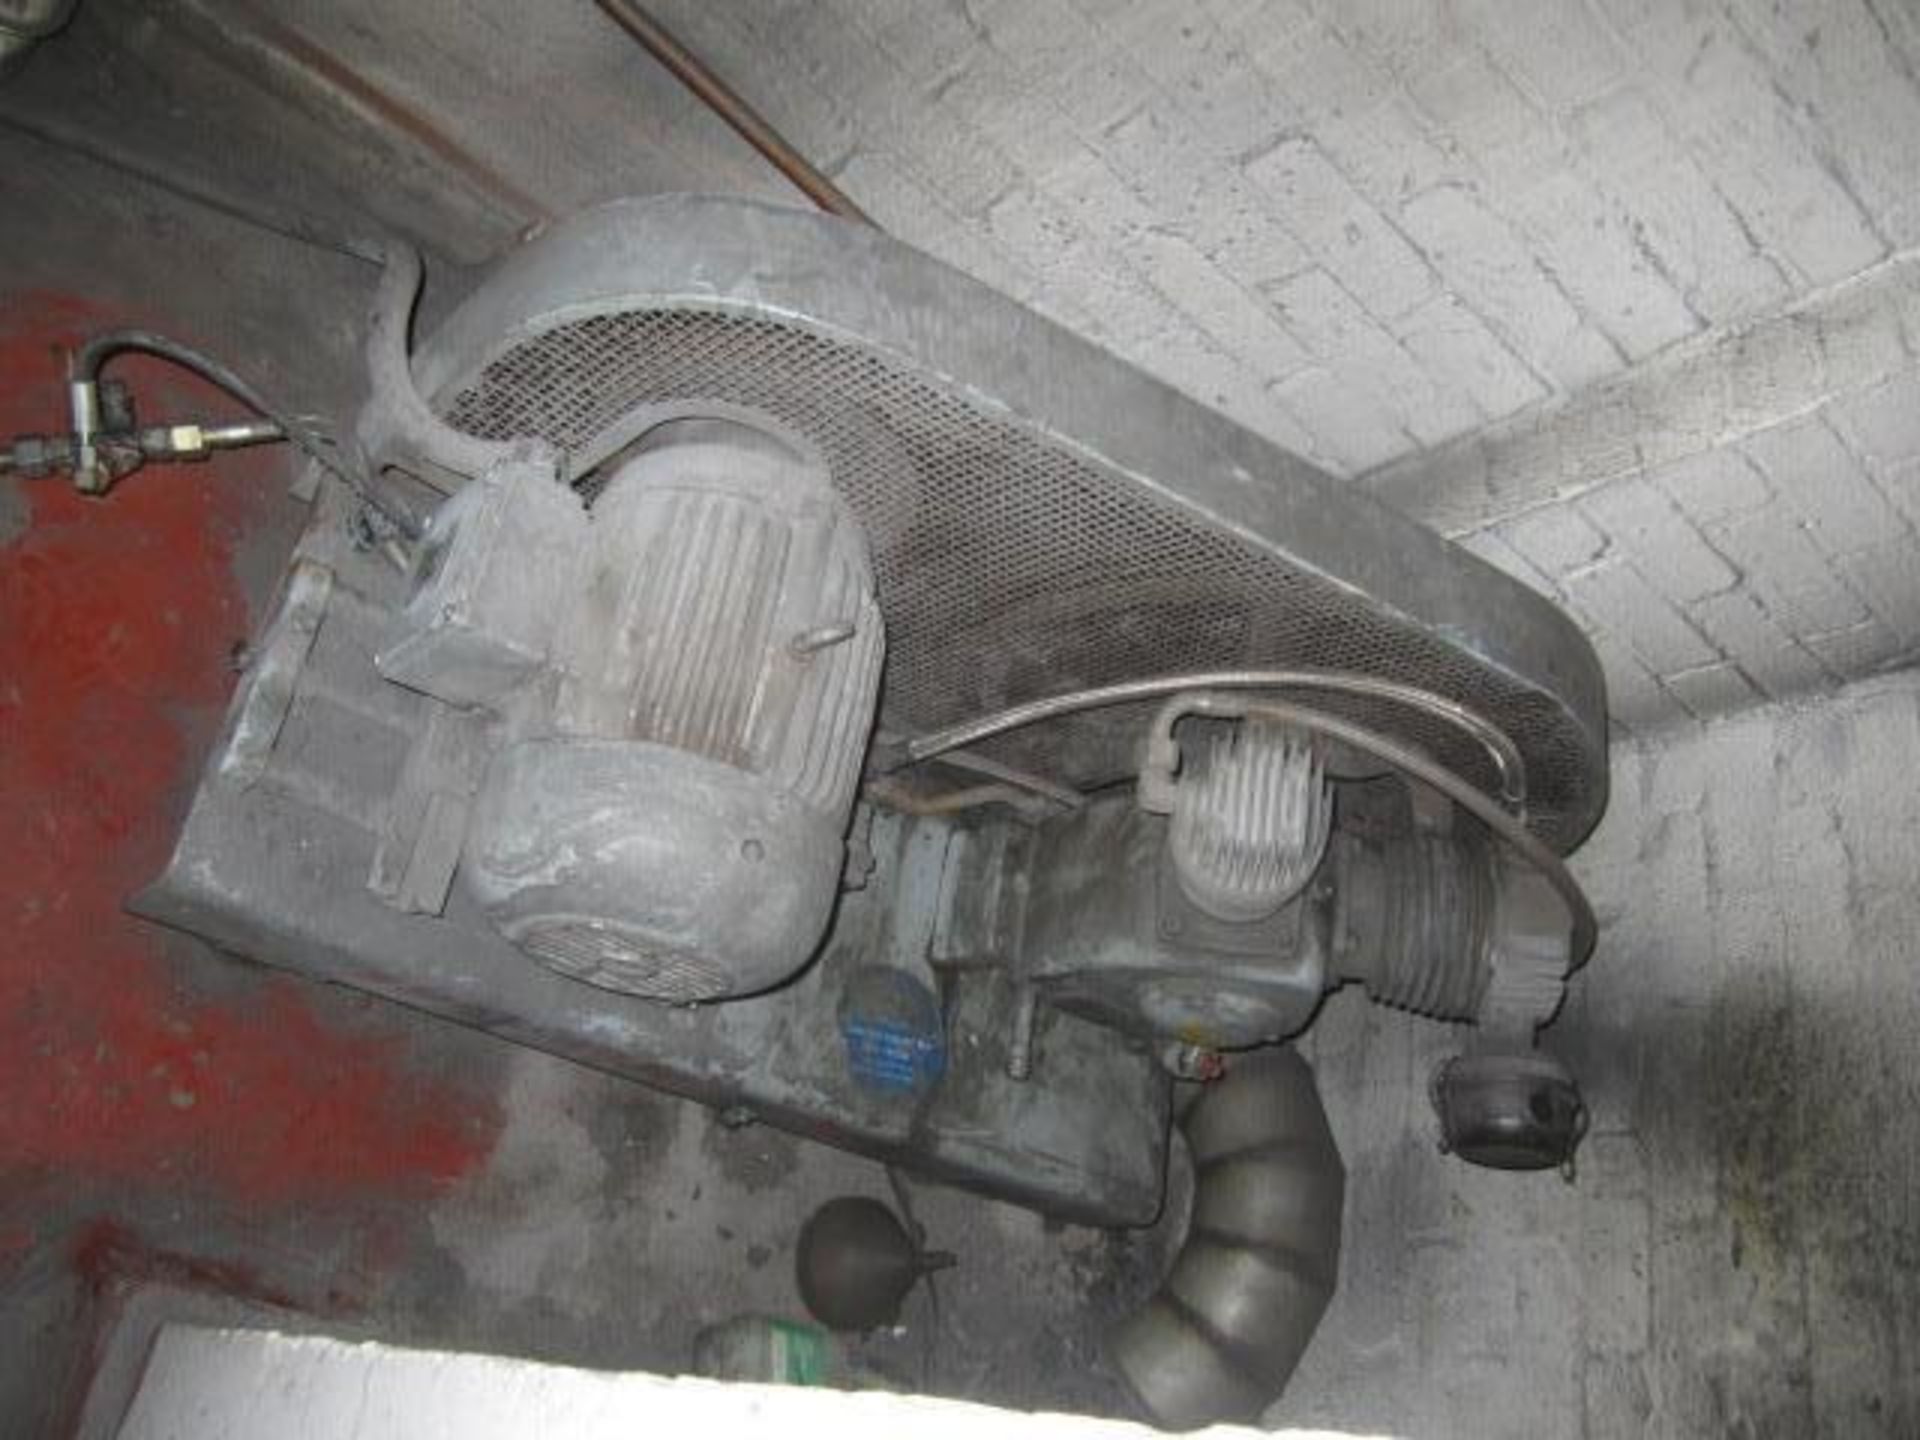 Boge Kompressor reciprocating air compressor, type SKH15, serial no. 295141 (1985) with air